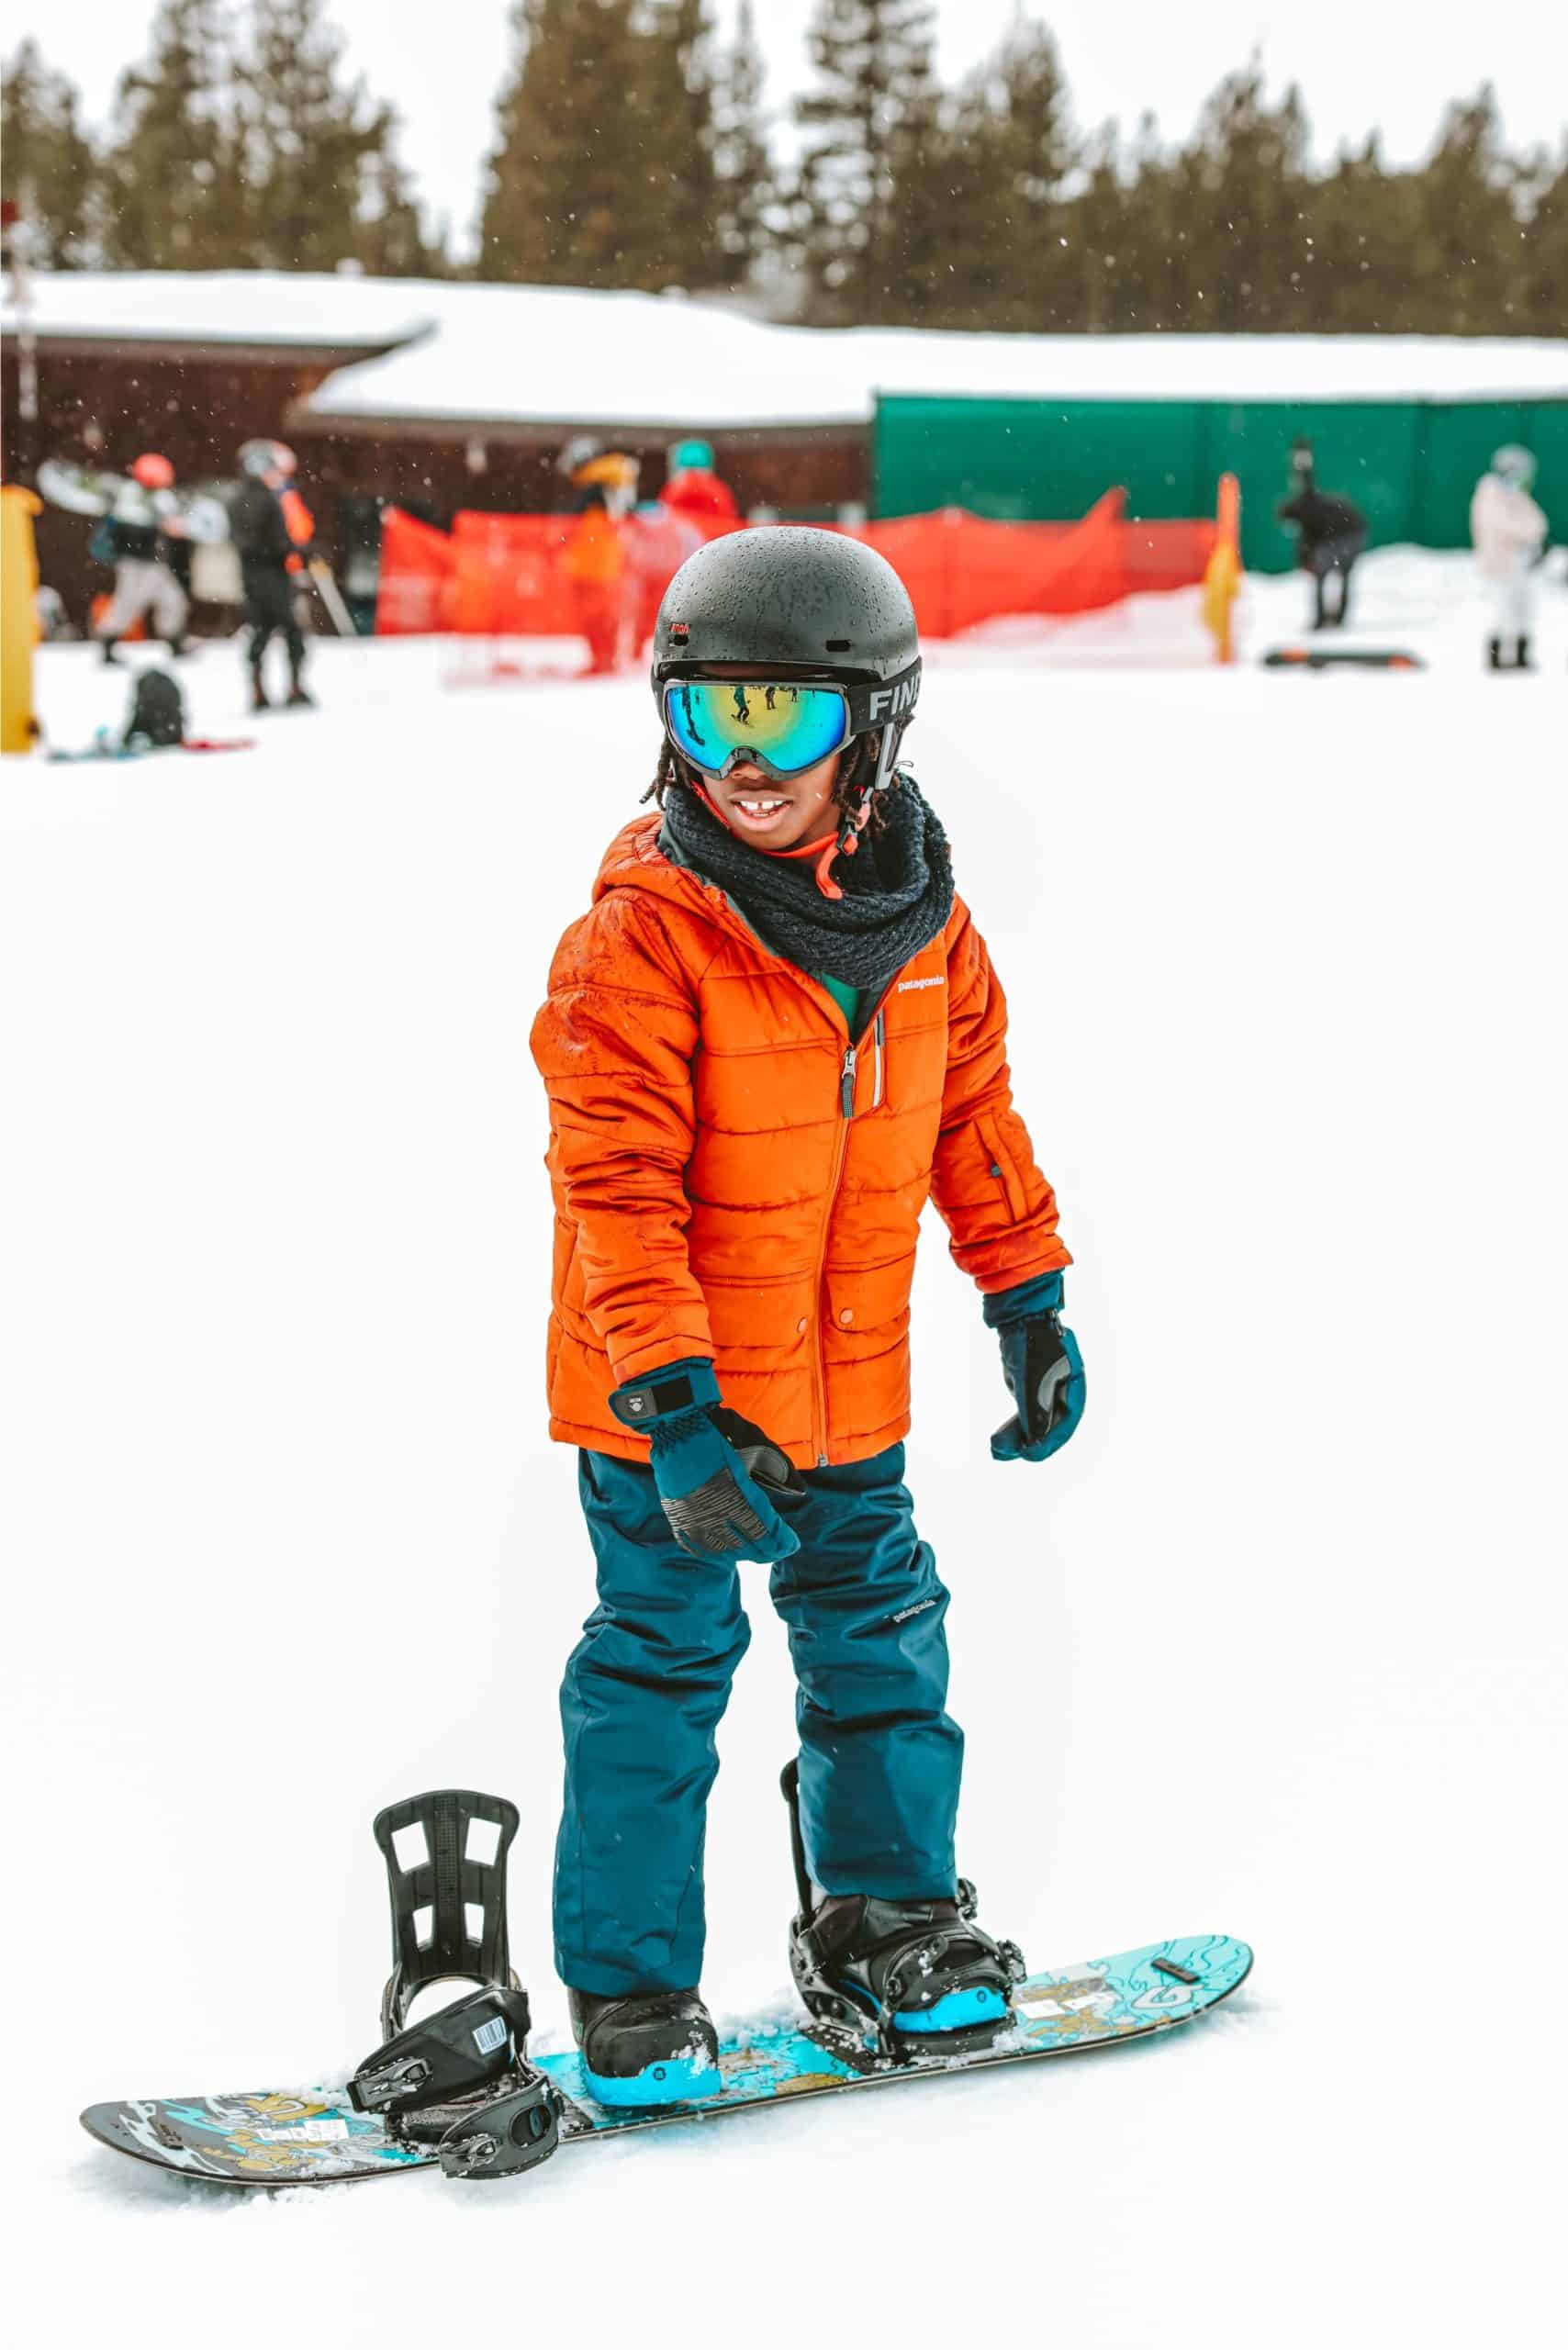 Heavenly snowboarding lesson for kids